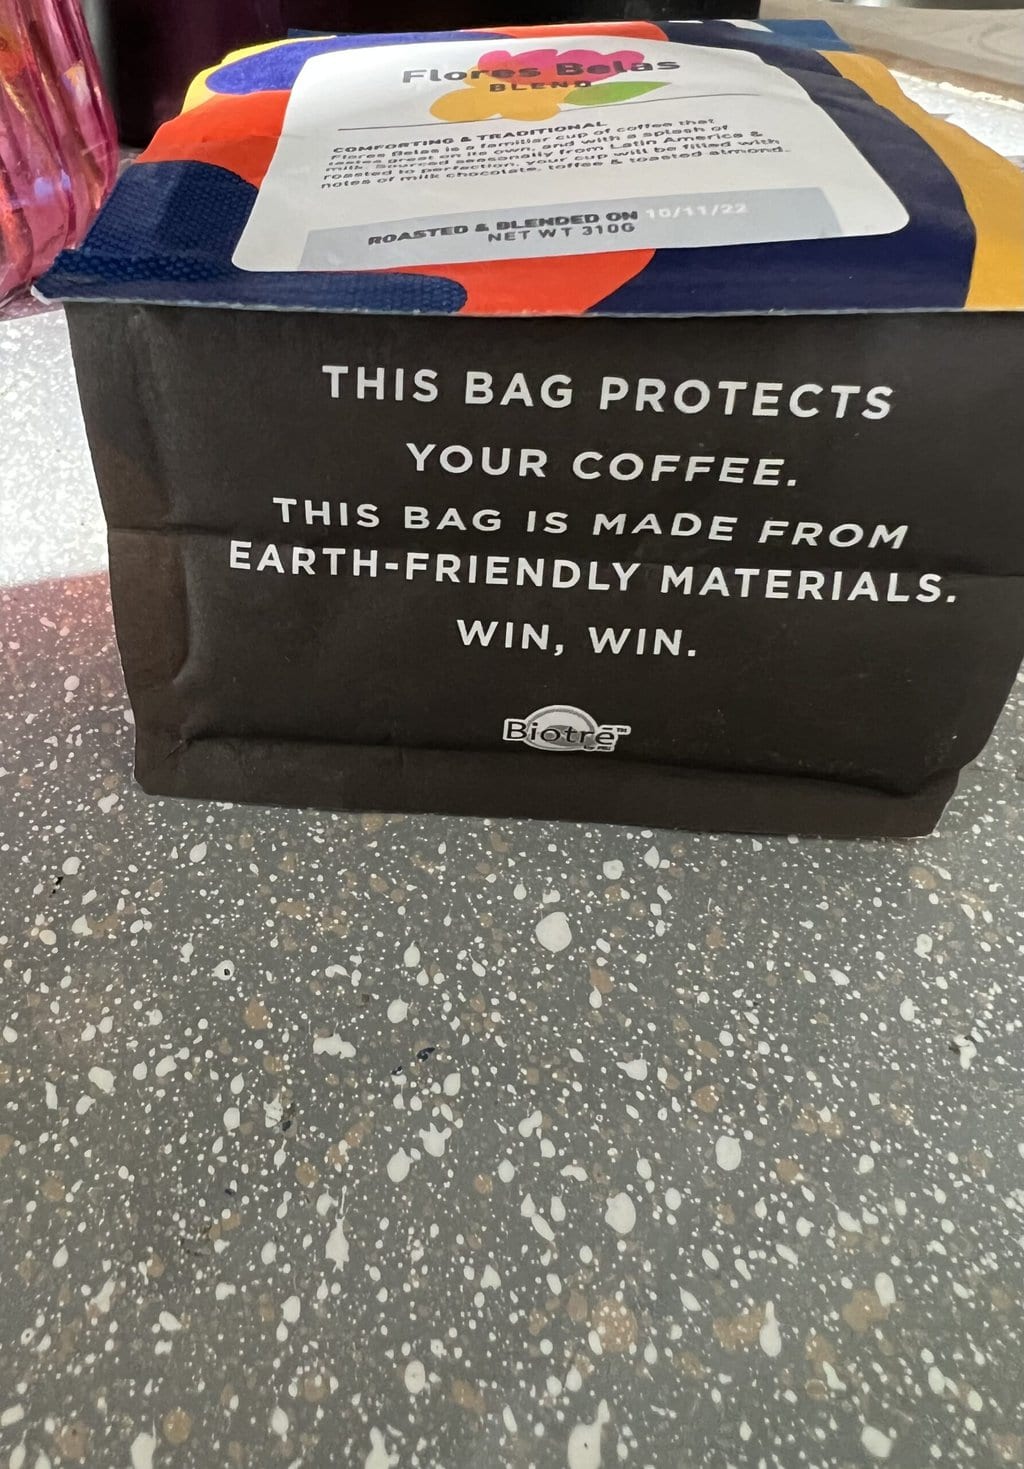 Huck咖啡背包内写文表示打包用生态友好材料制成